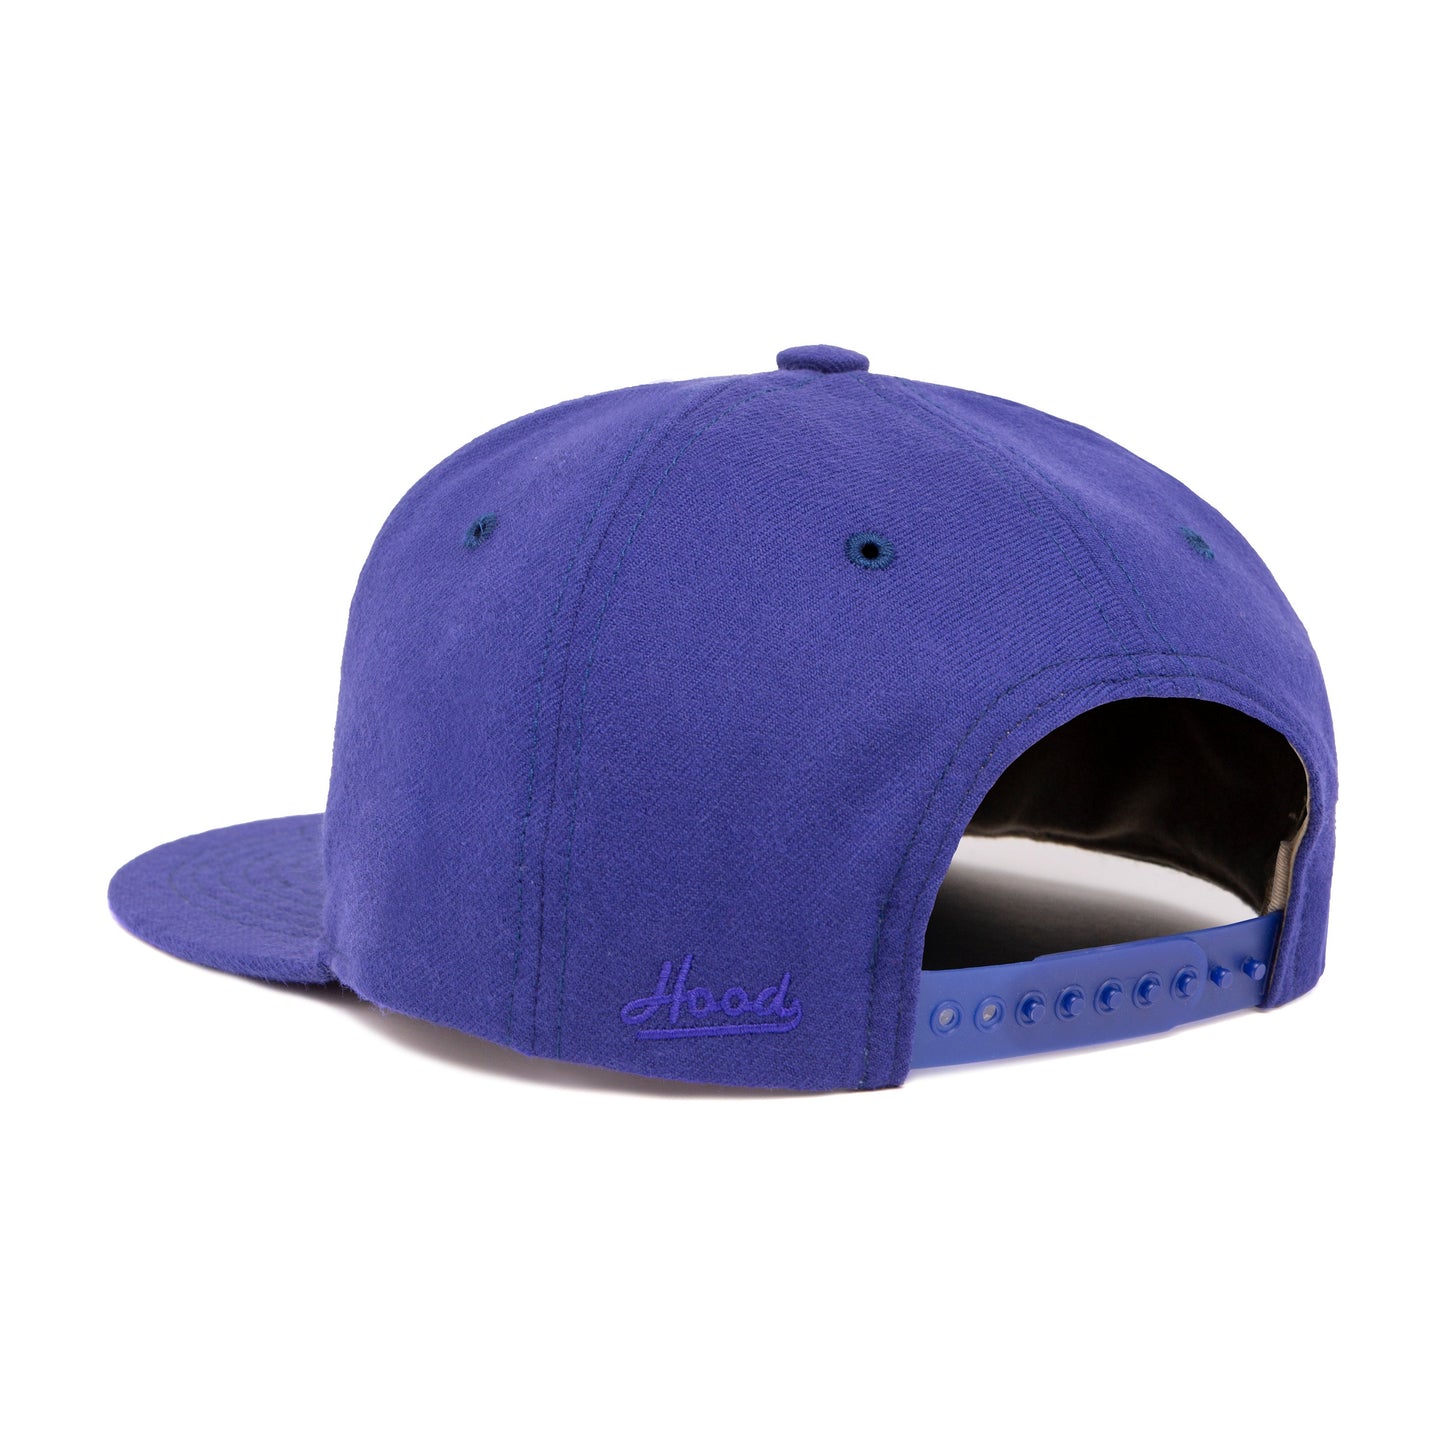 Flatbush Snapback Hat